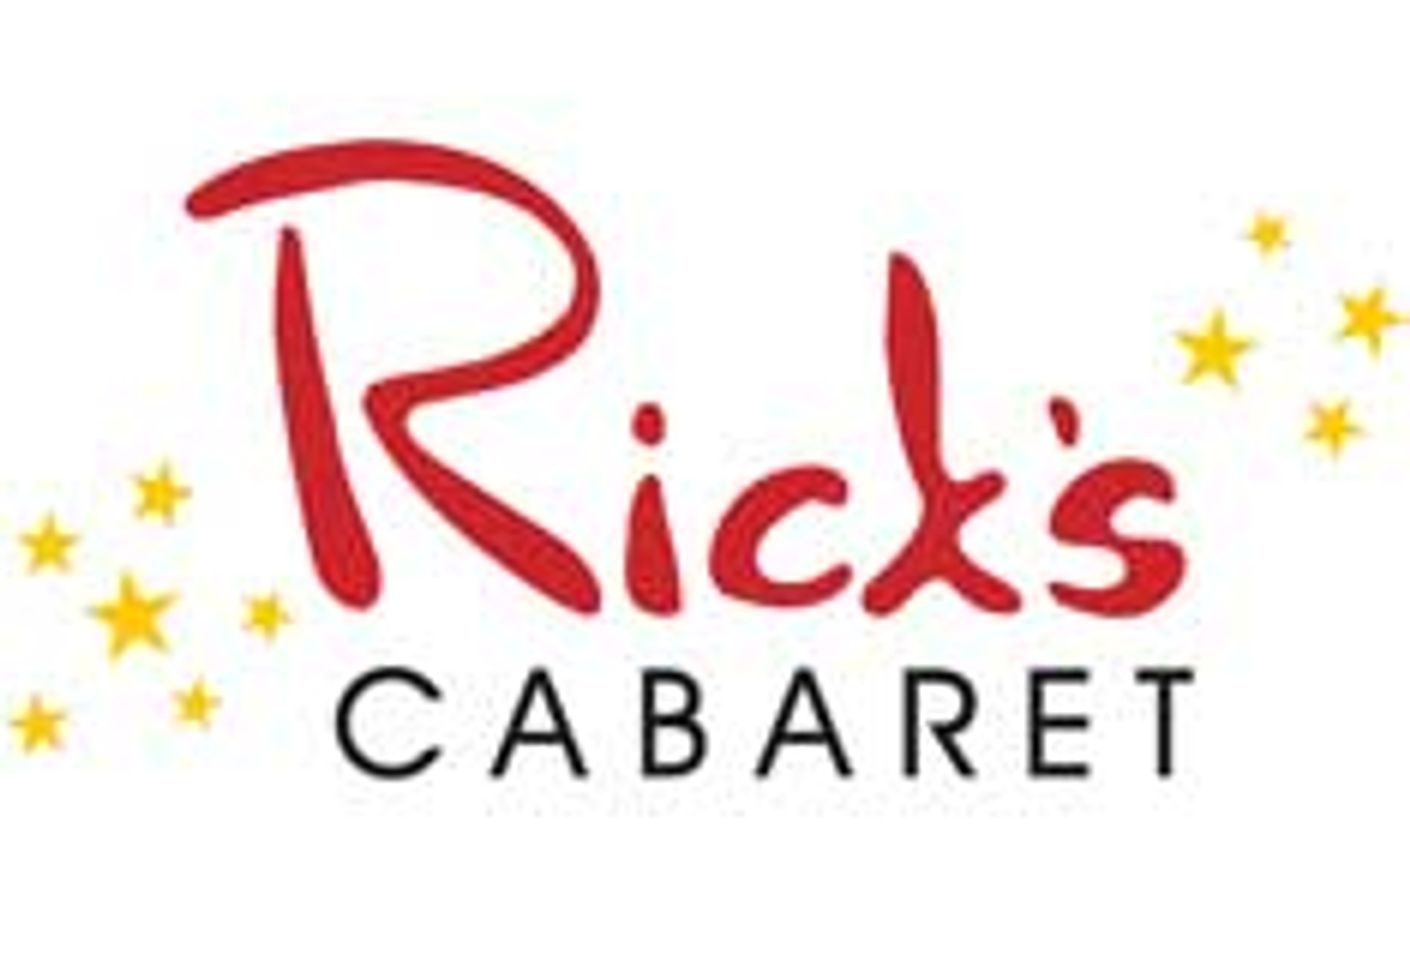 Rick’s Cabaret International First Quarter Revenues Climb